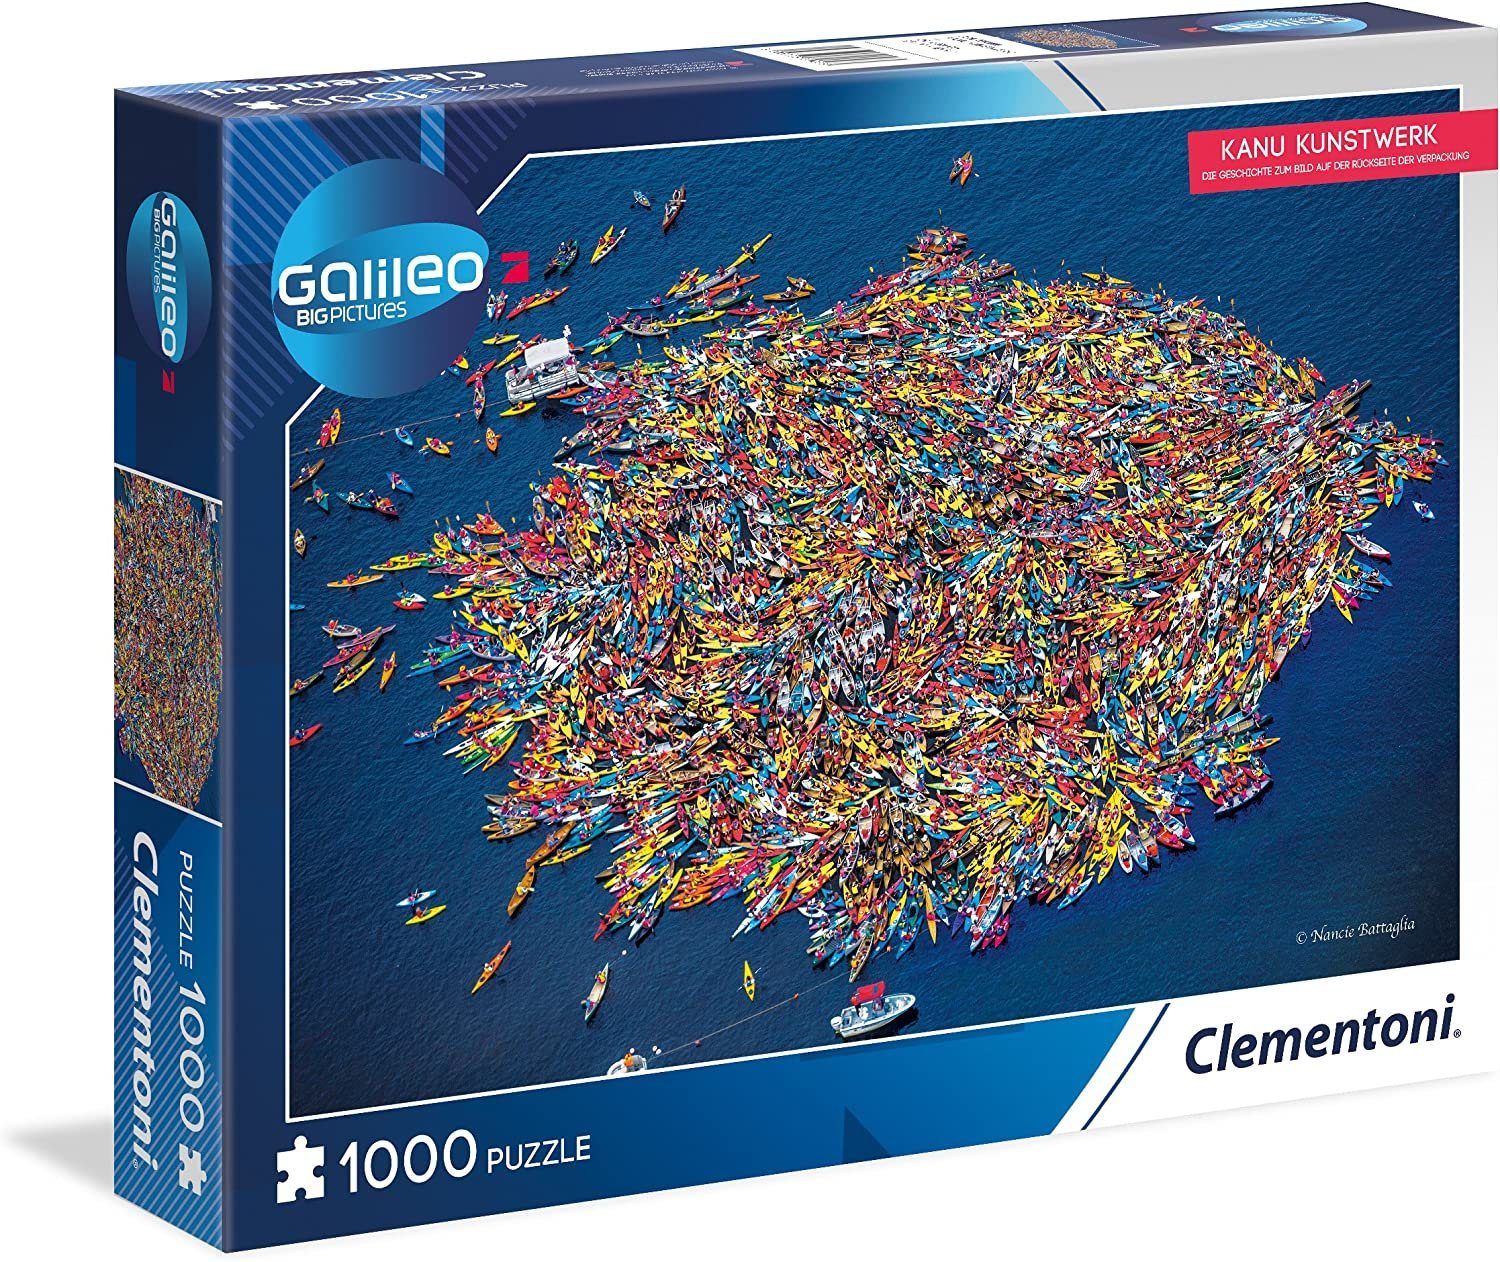 Clementoni® Puzzle Galileo Big Pictures Puzzle - Kanu Kunstwerk (1000 Teile), 1000 Puzzleteile